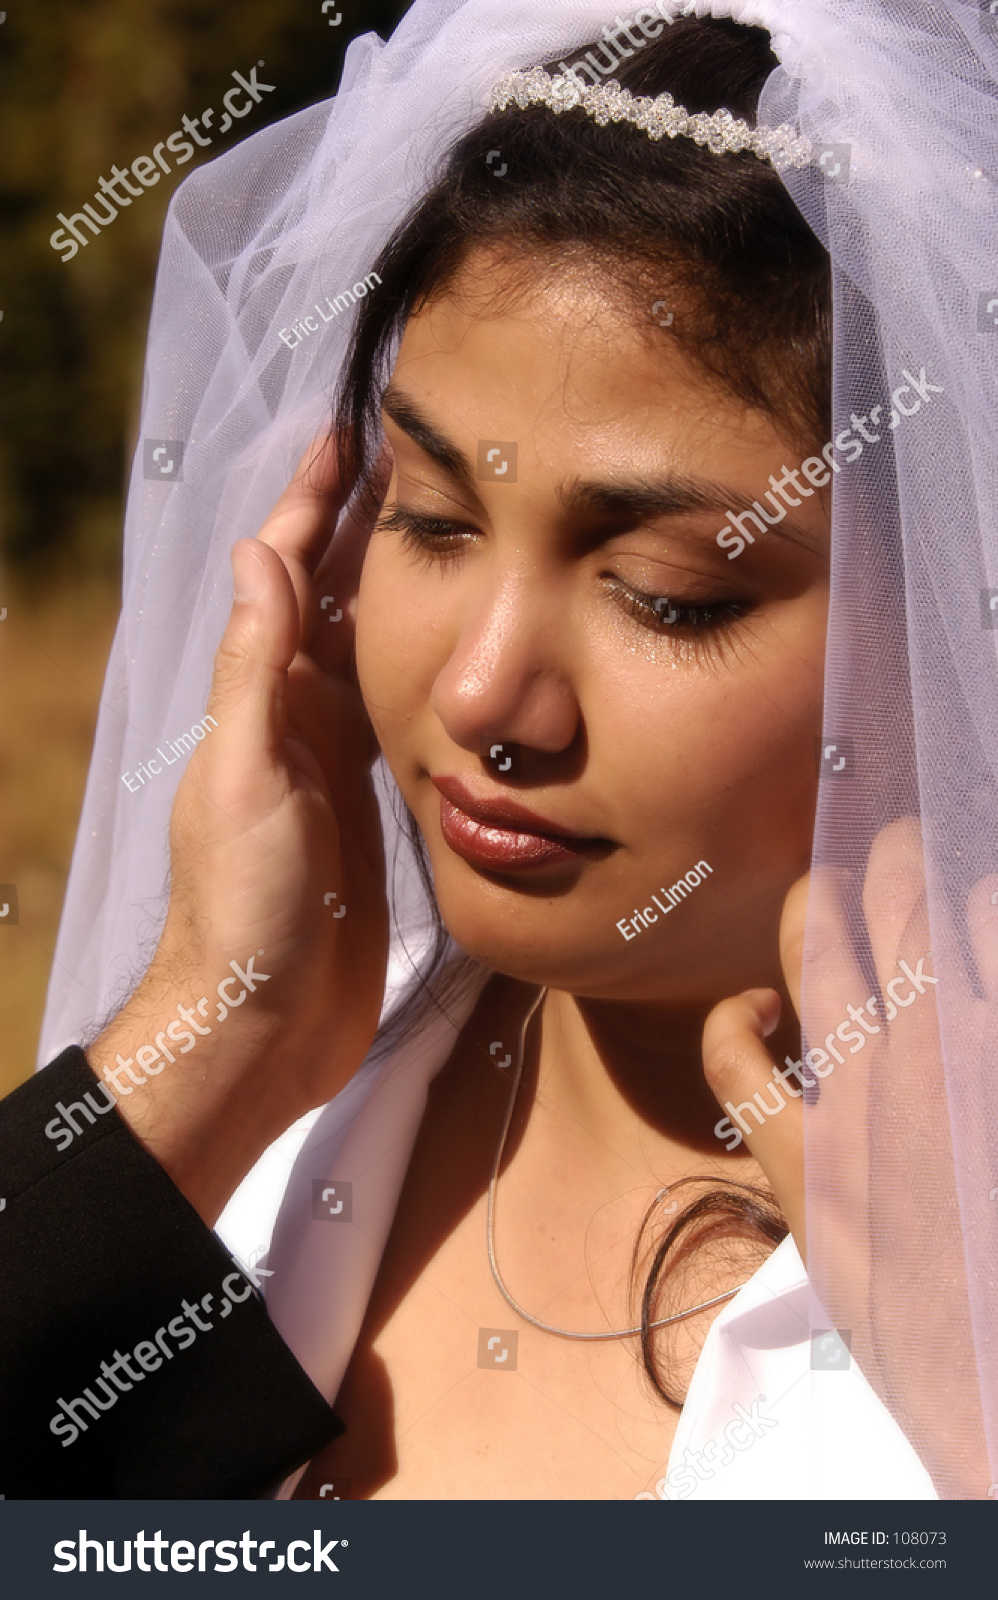 stock photo mexican bride wedding 108073